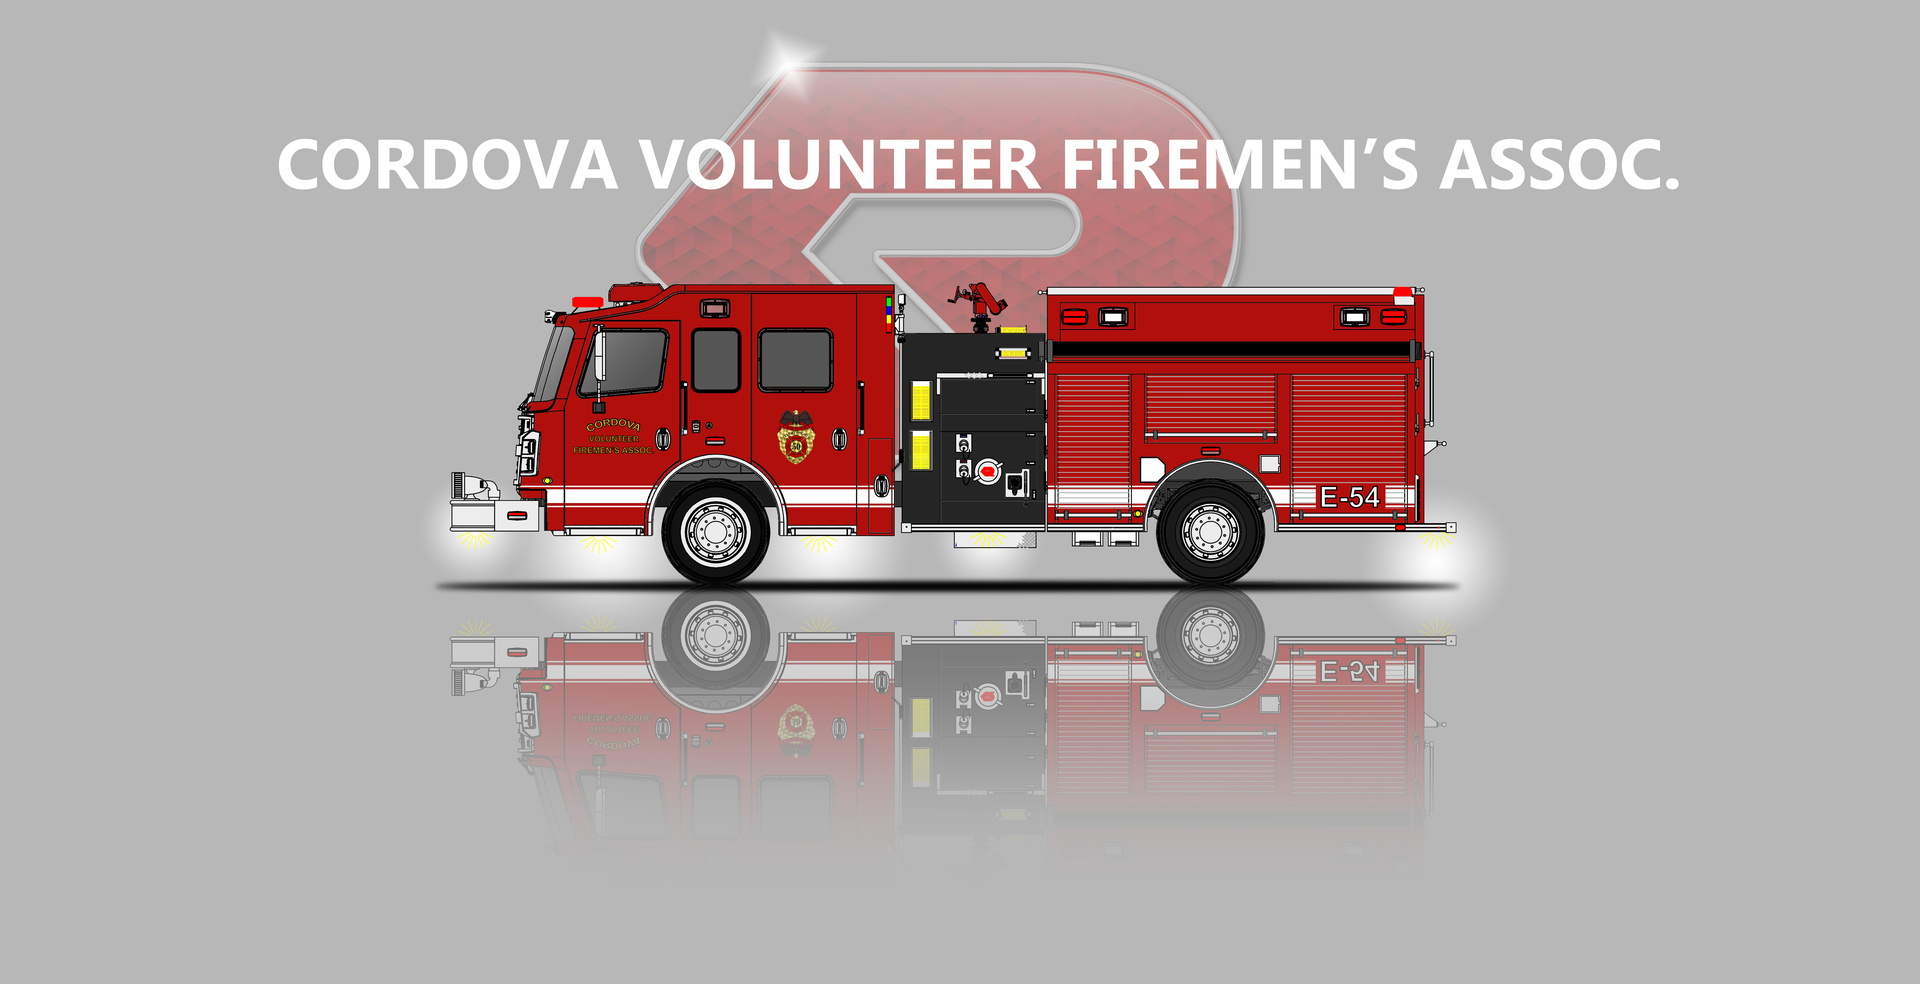 Featured image for “Cordova Volunteer Firemen’s Association”